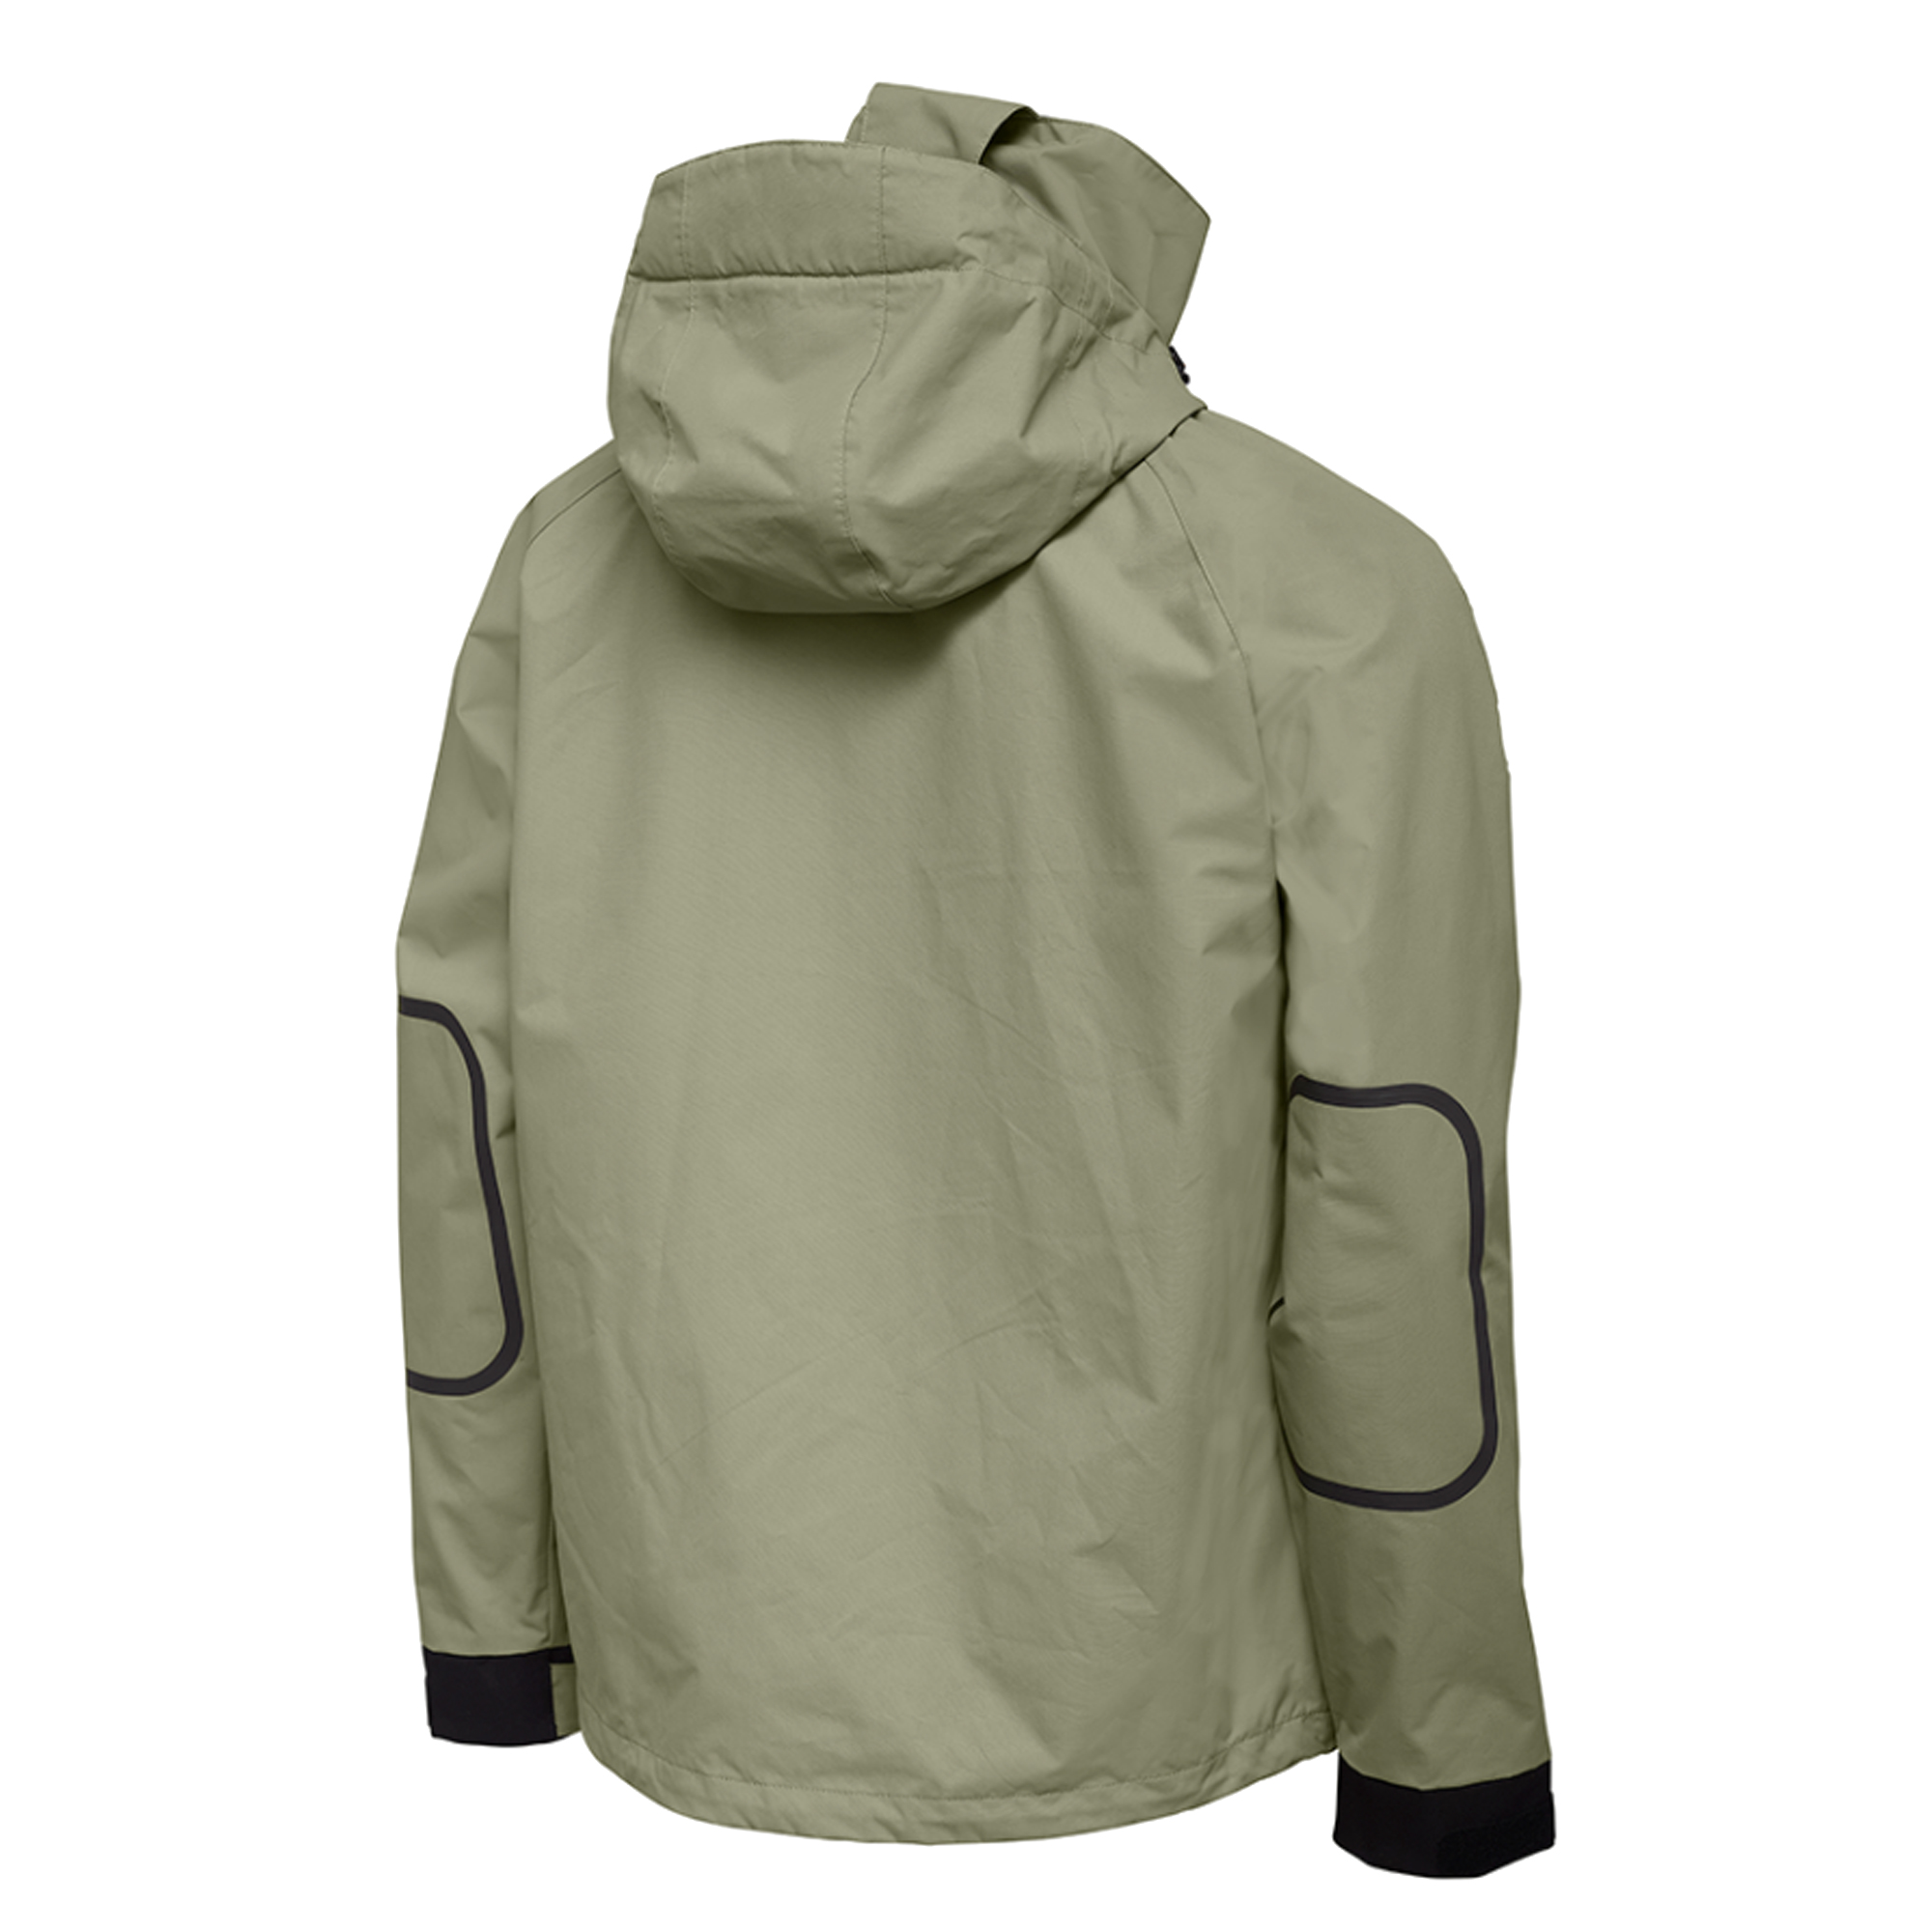 savage gear sg2 hybrid jacket slate green - Negozio di pesca online ...